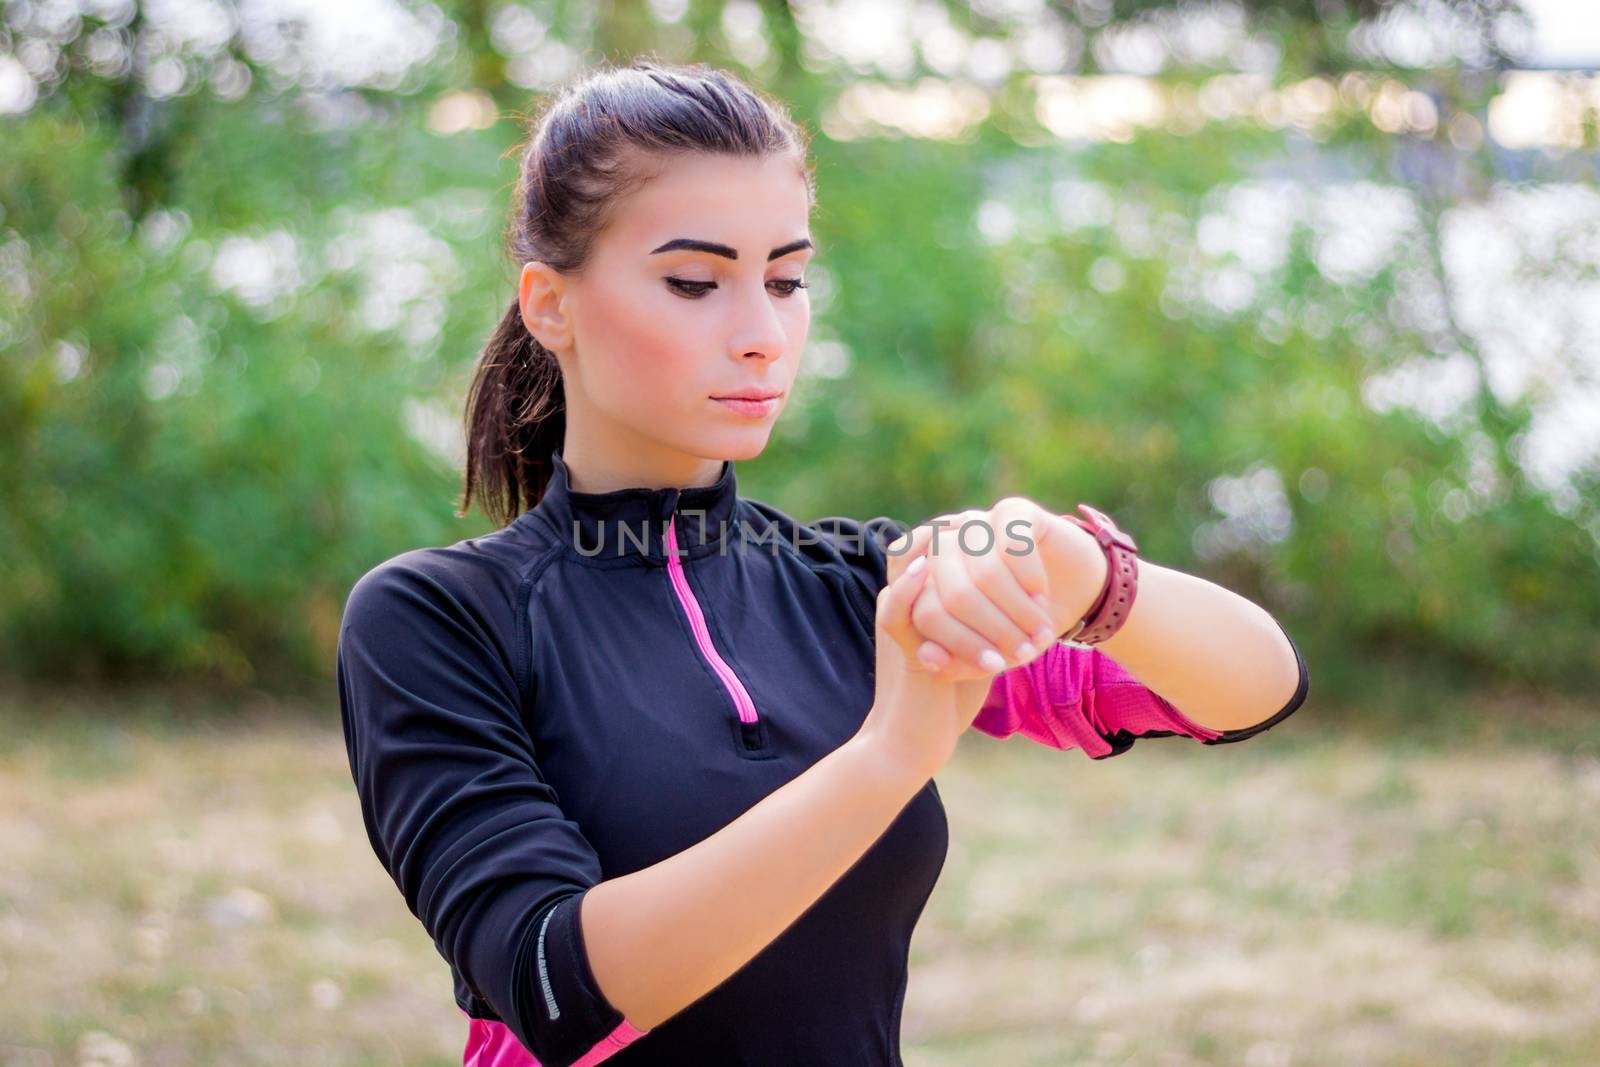 Ftitness girl checks stopwatch tracker on her wrist during run by VeraVerano